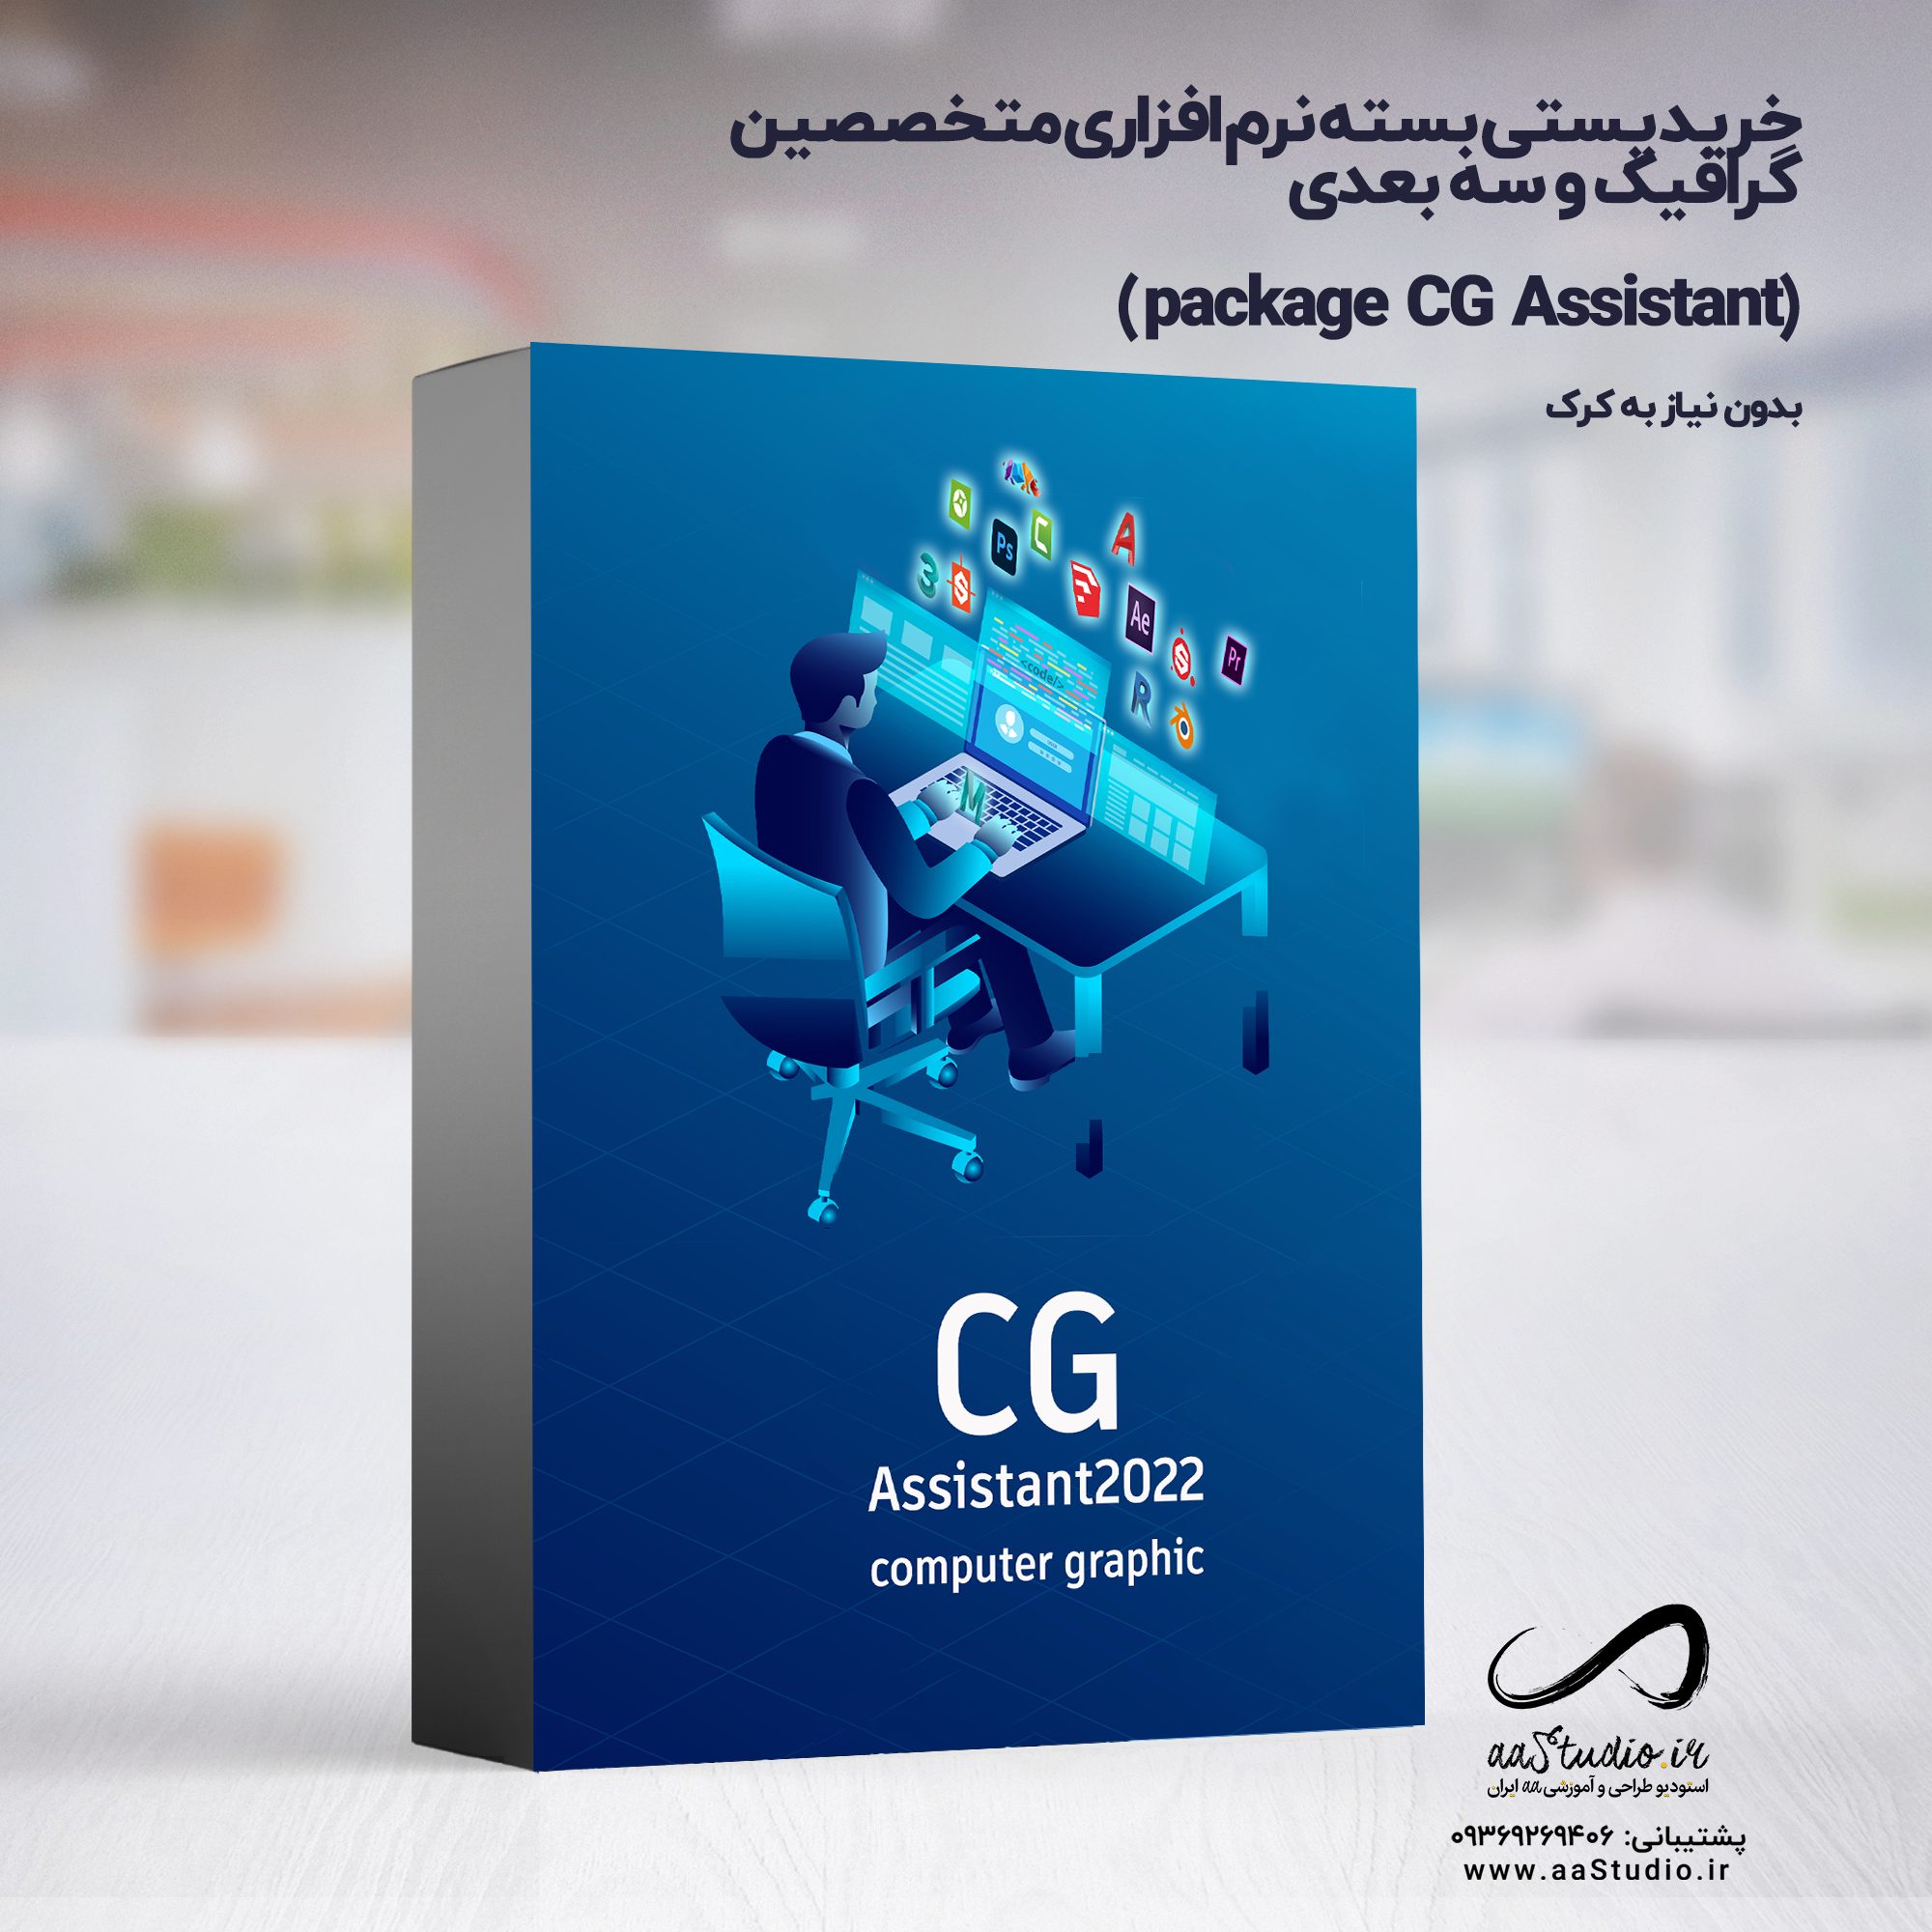 package CG Assistant |بسته نرم افزار های کاربردی حوزه معماری و شهرسازی